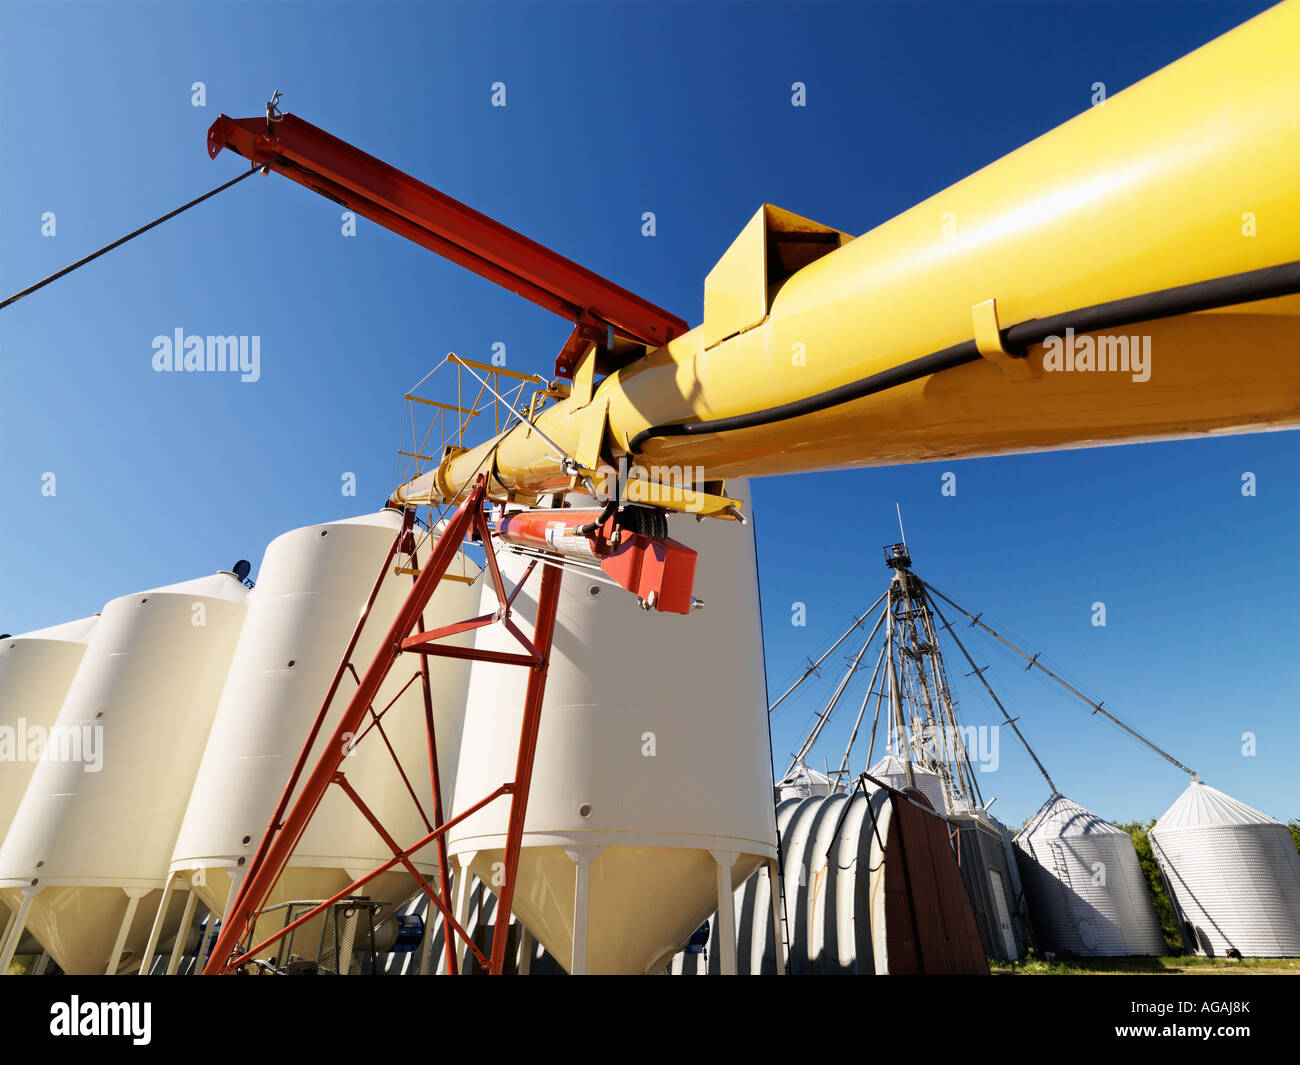 Metal grain storage silo facility against blue background Stock Photo